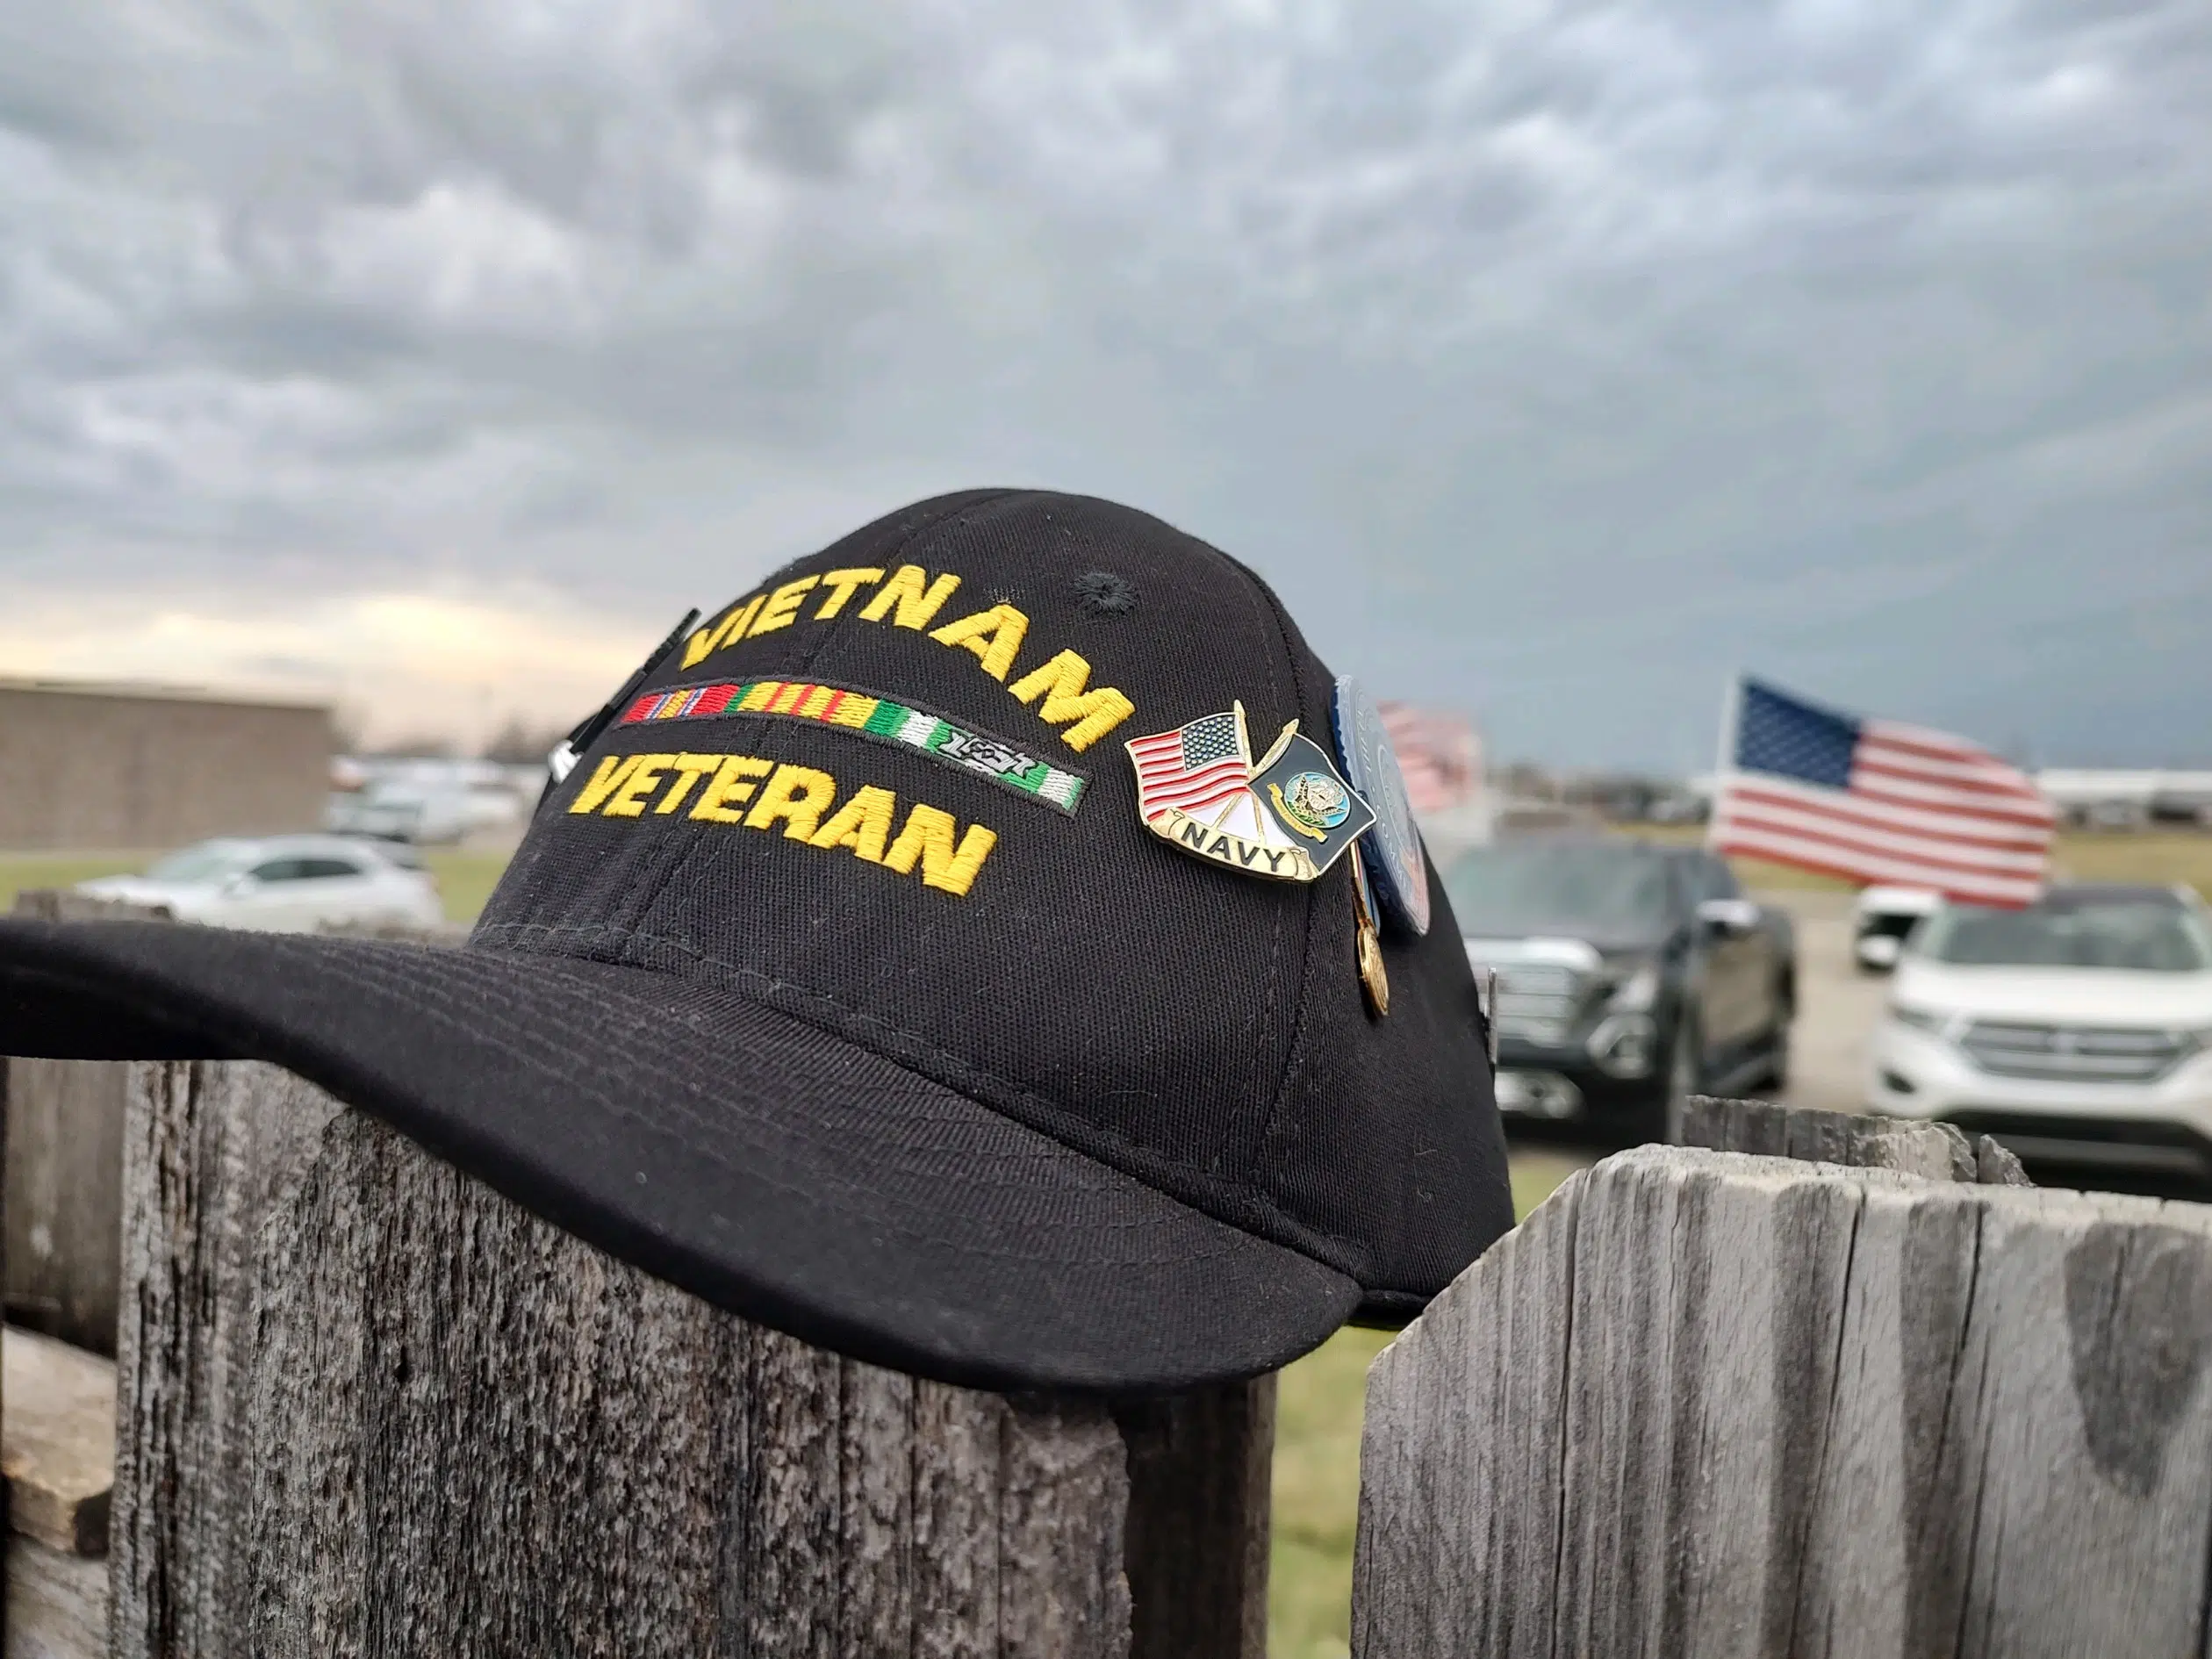 Local Vietnam veterans receive "Welcome Home" on Vietnam War Veterans Day Tuesday